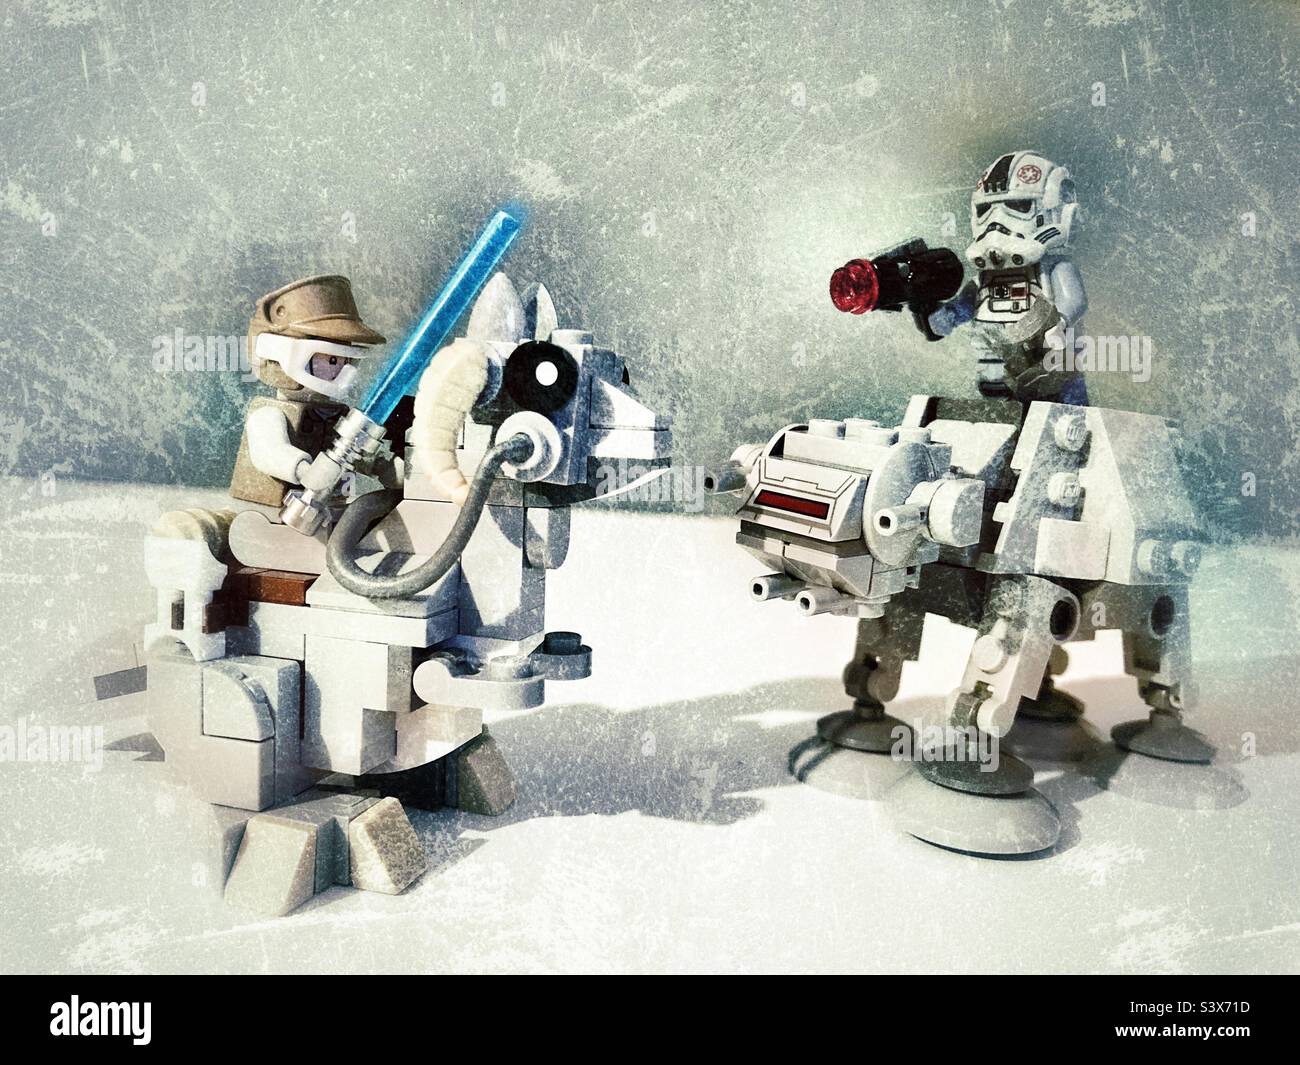 Star Wars Luke Skywalker and Imperial Stormtrooper LEGO minifigures Stock Photo